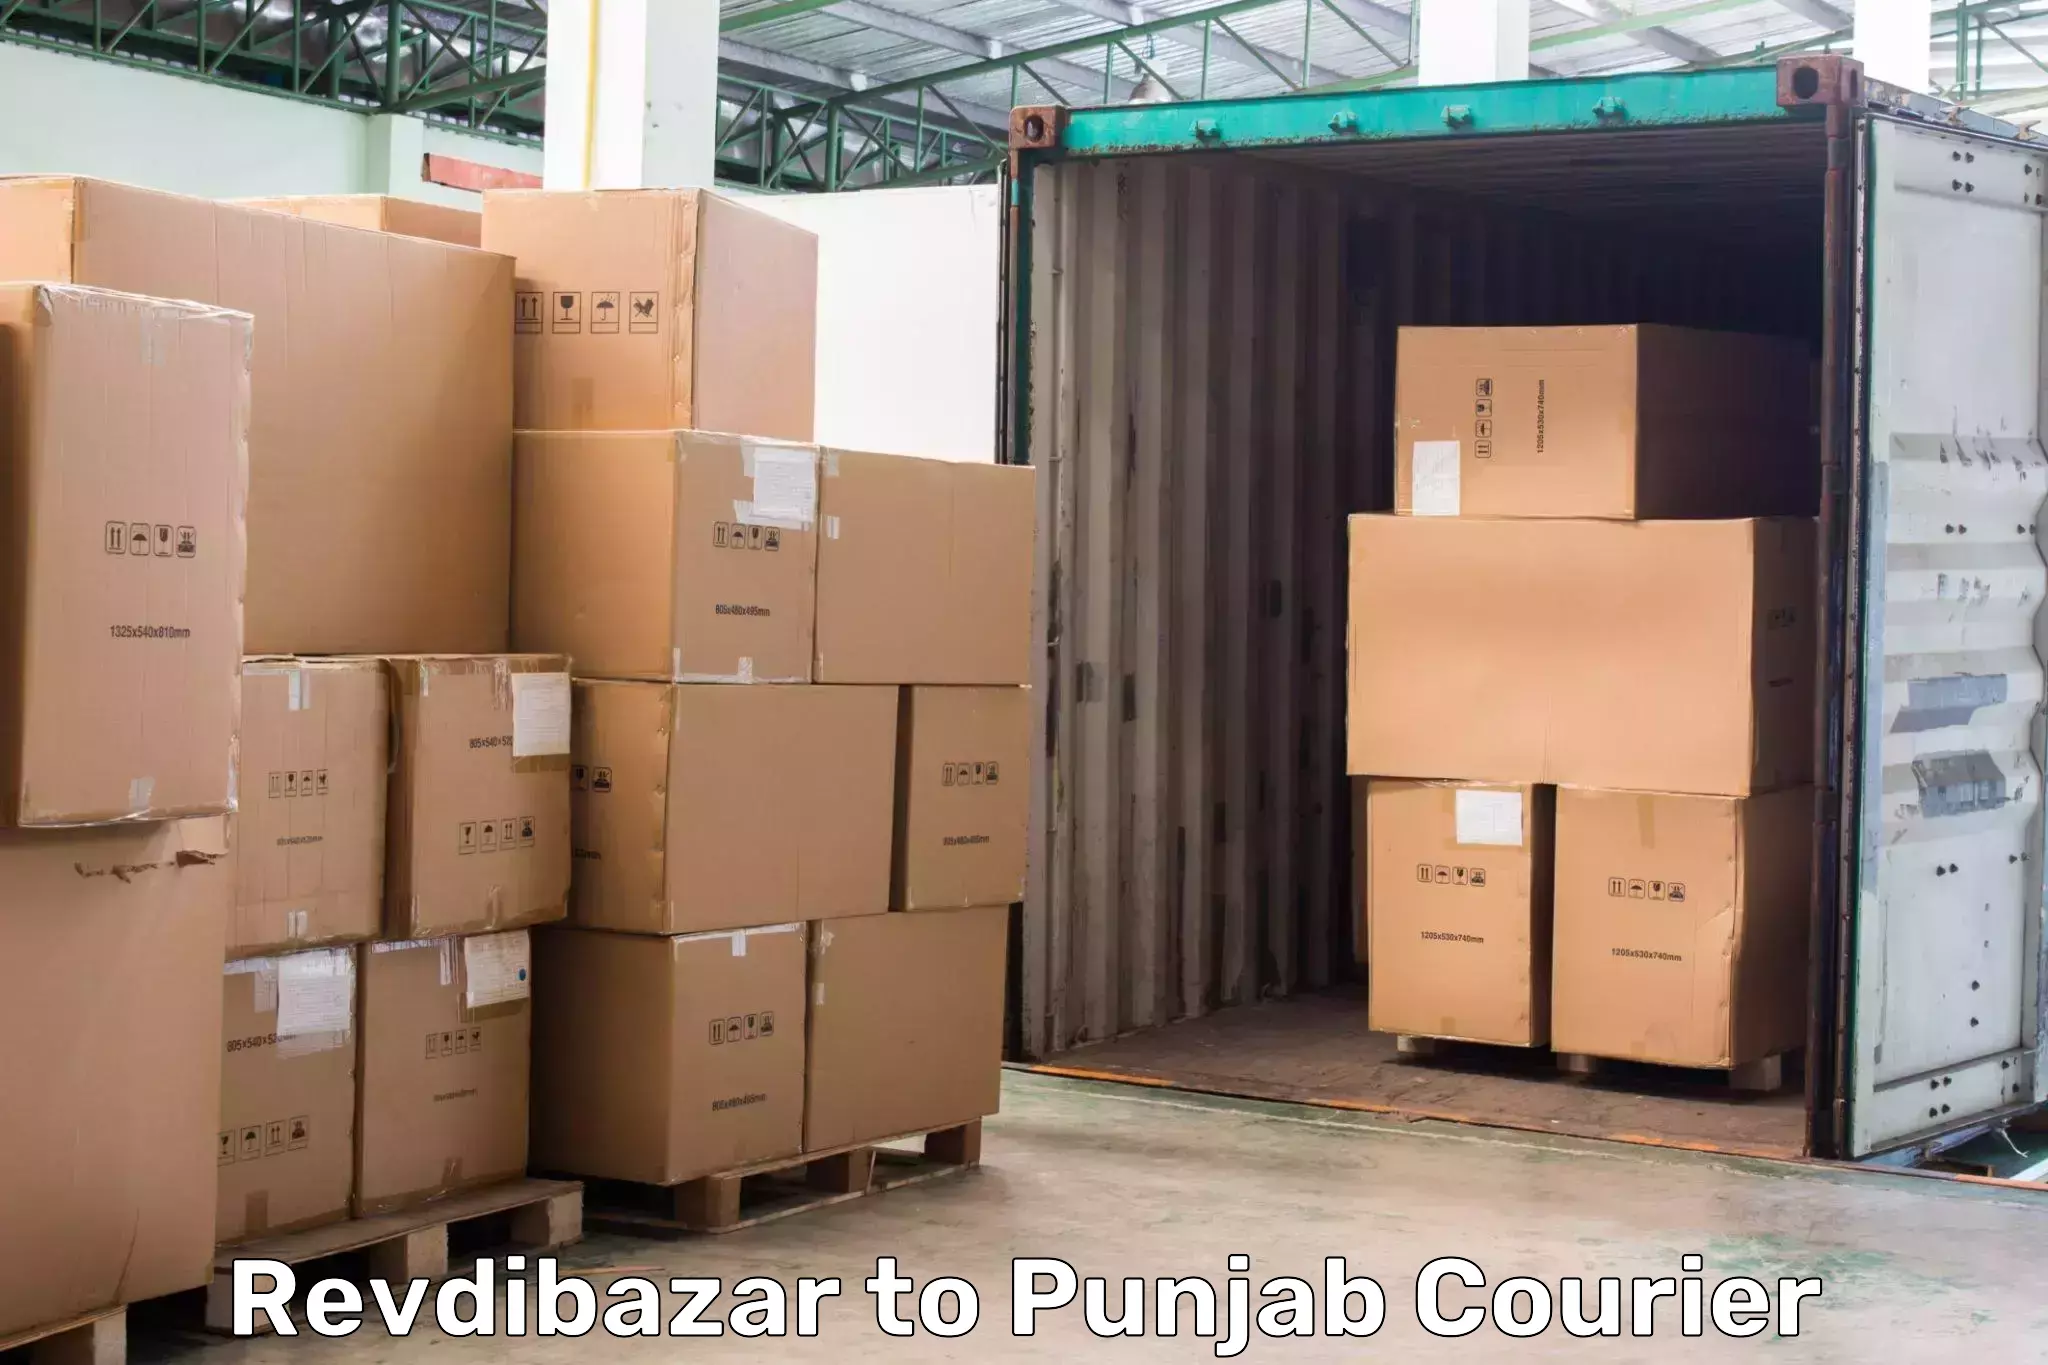 Courier service partnerships Revdibazar to Hoshiarpur